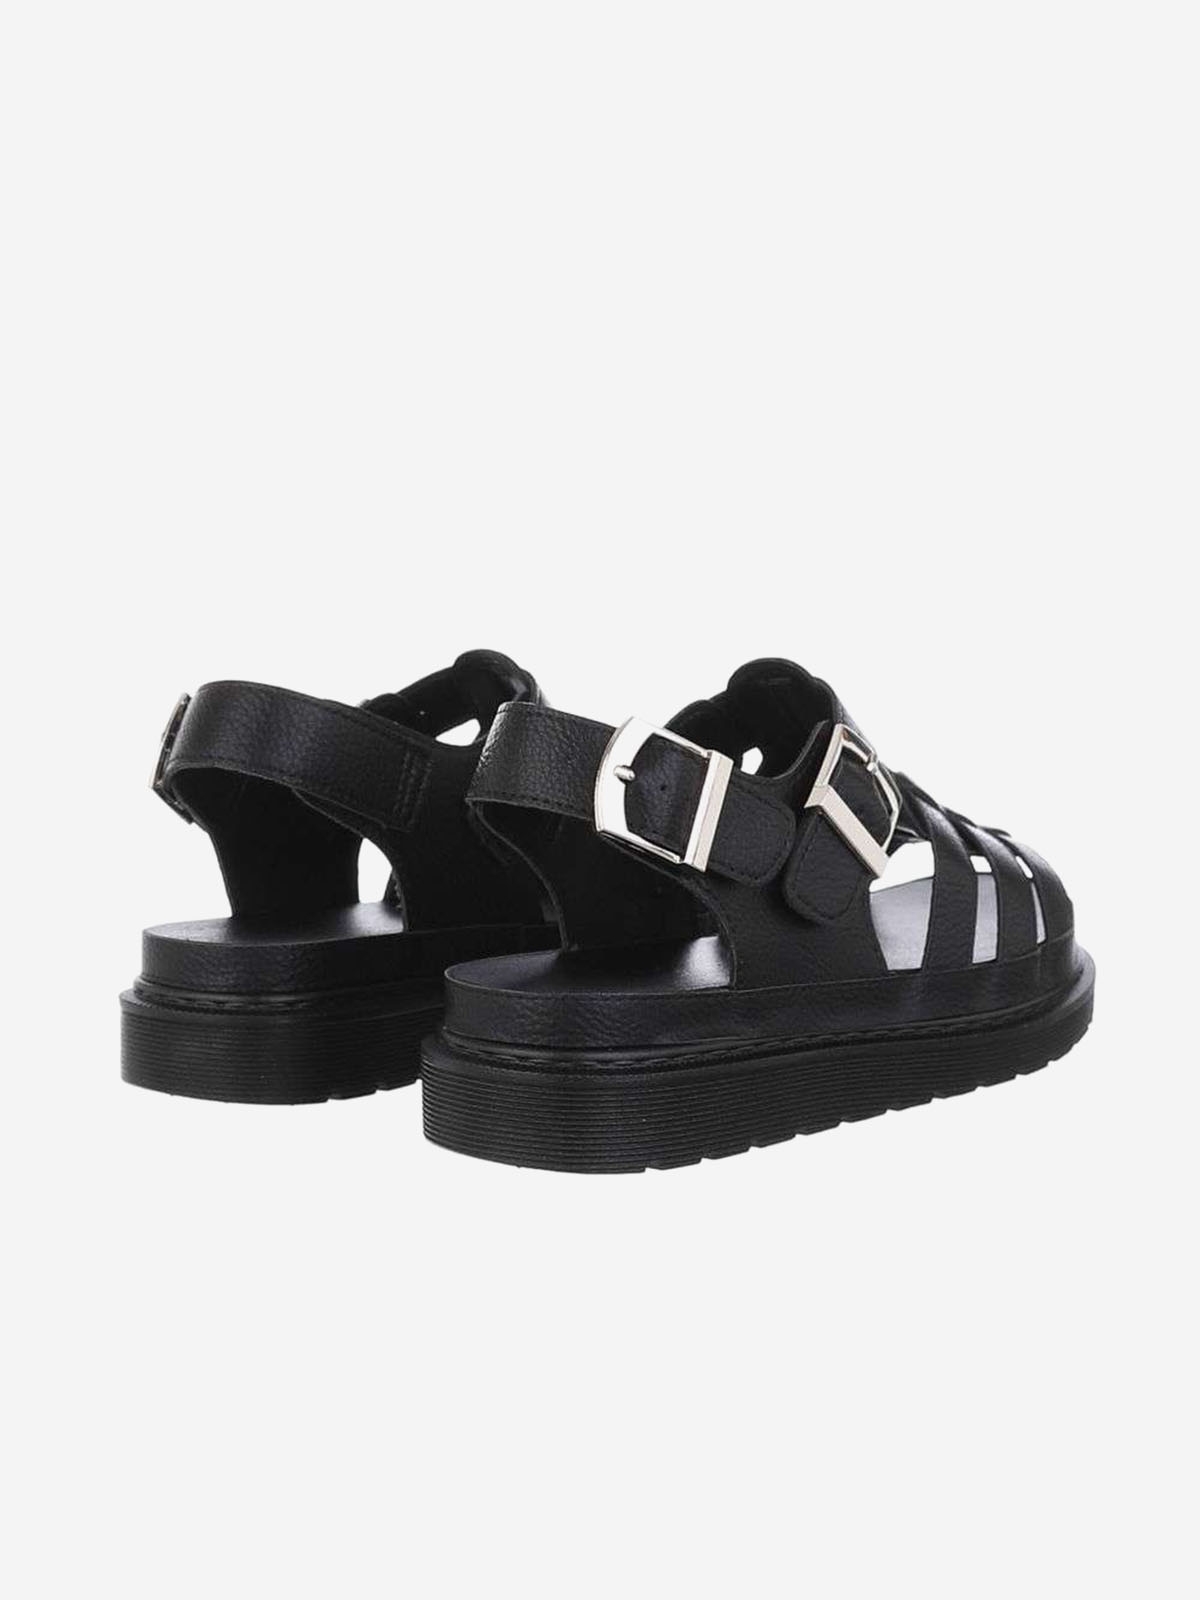 Sandals with adjustable straps in black